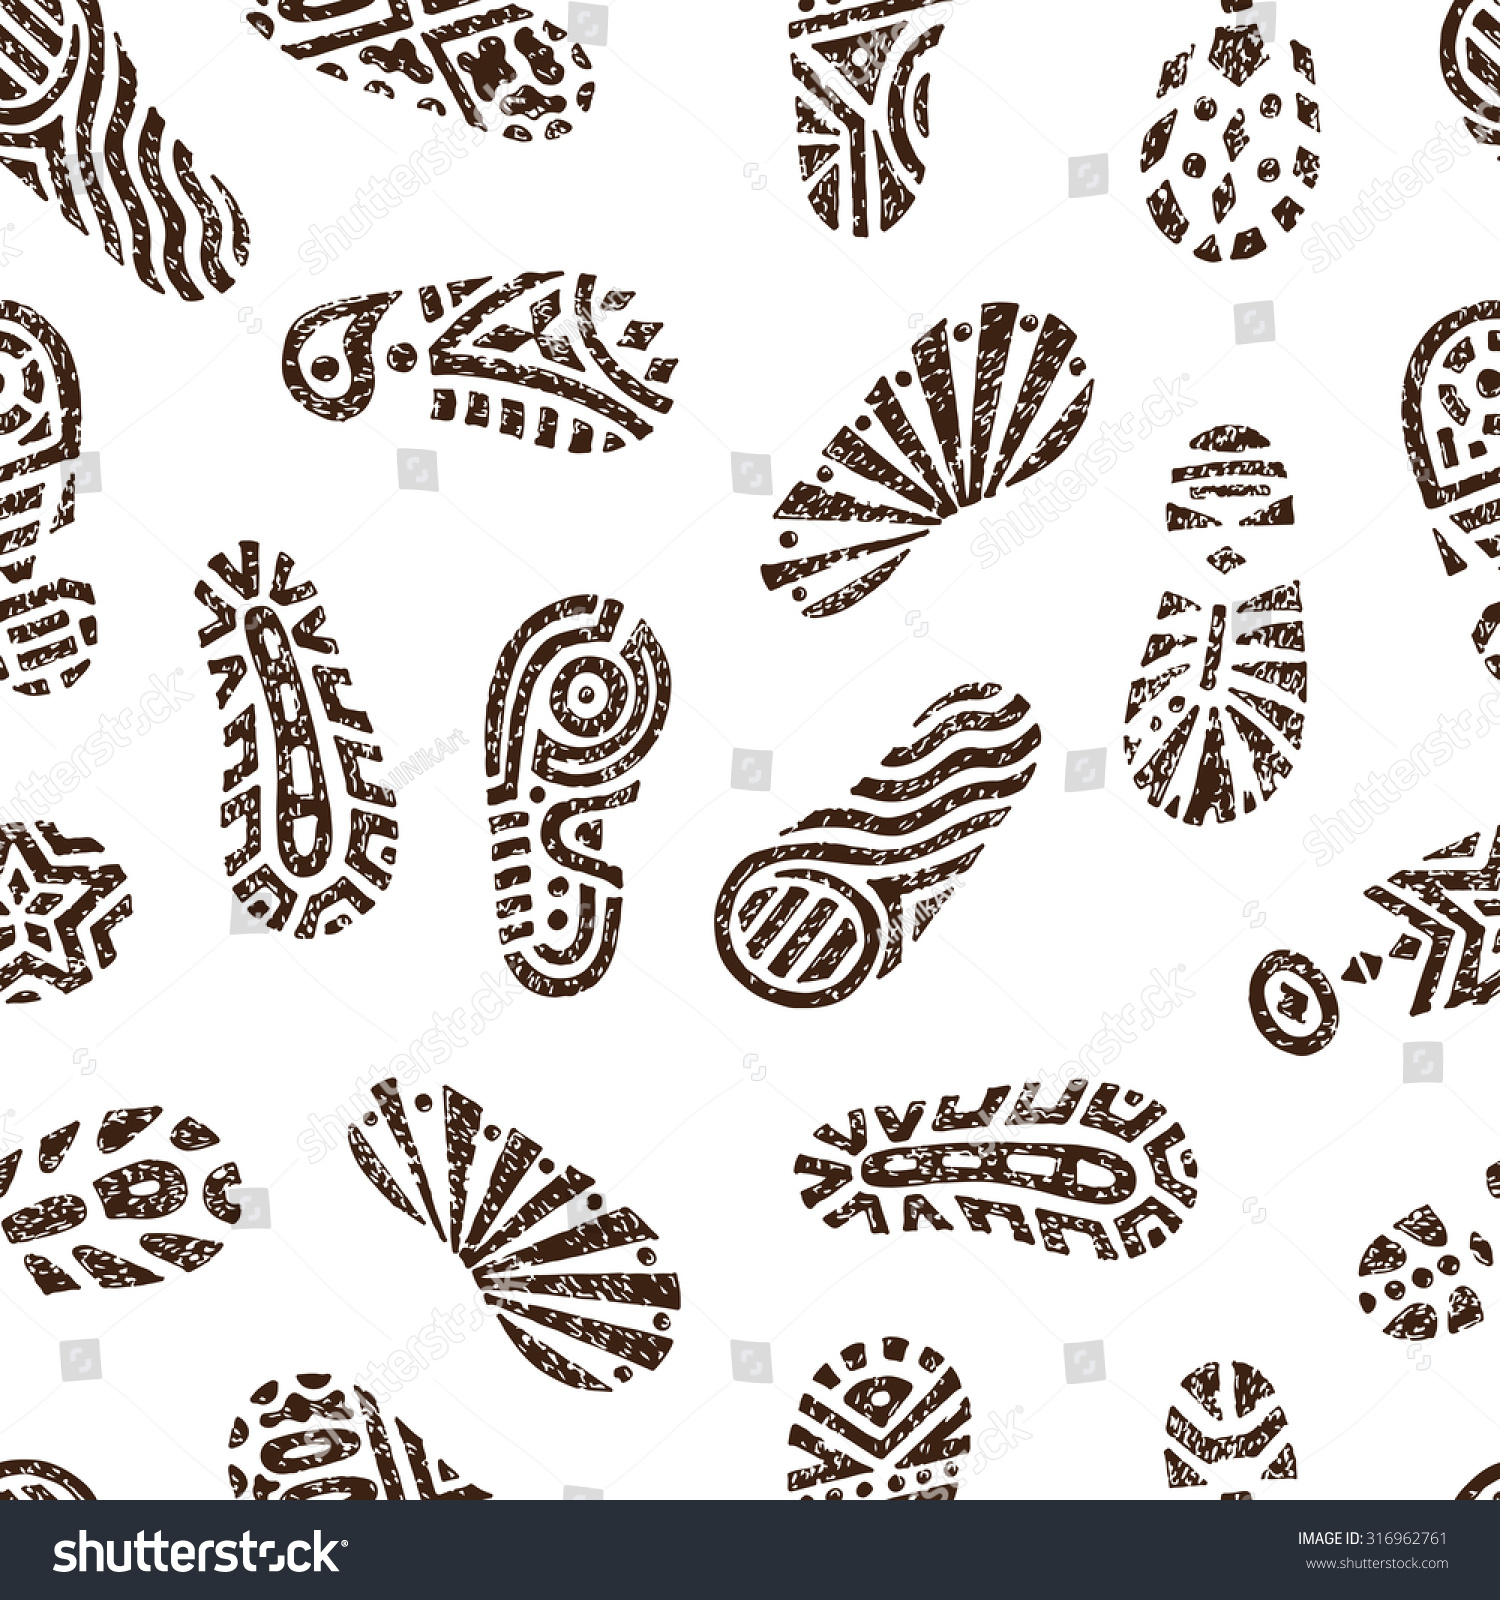 Grunge Footprints Seamless Pattern. Hand Drawn Doodles Shoe Tracks ...